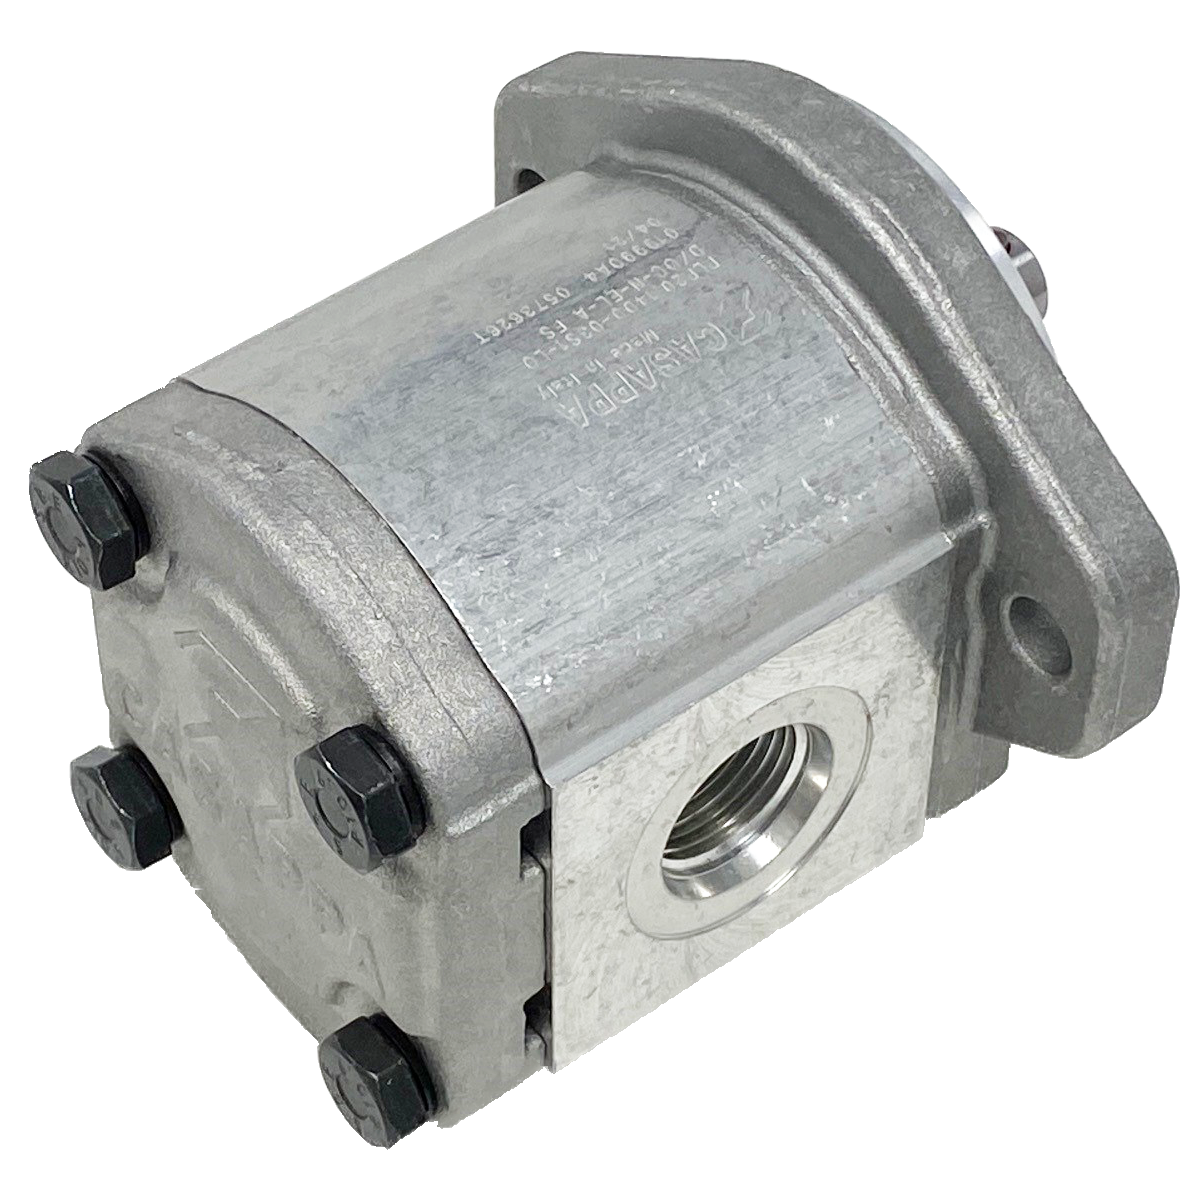 PLM20.20R0-31S1-LOC/OD-N-EL : Casappa Polaris Gear Motor, 21.14cc, 2900psi Rated, 3000RPM, Reversible Rear External Drain, 5/8" Bore x 5/32" Key Shaft, SAE A 2-Bolt Flange, 0.625 (5/8") #10 SAE Inlet, 0.75 (3/4") #12 SAE Outlet, Aluminum Body & Flange